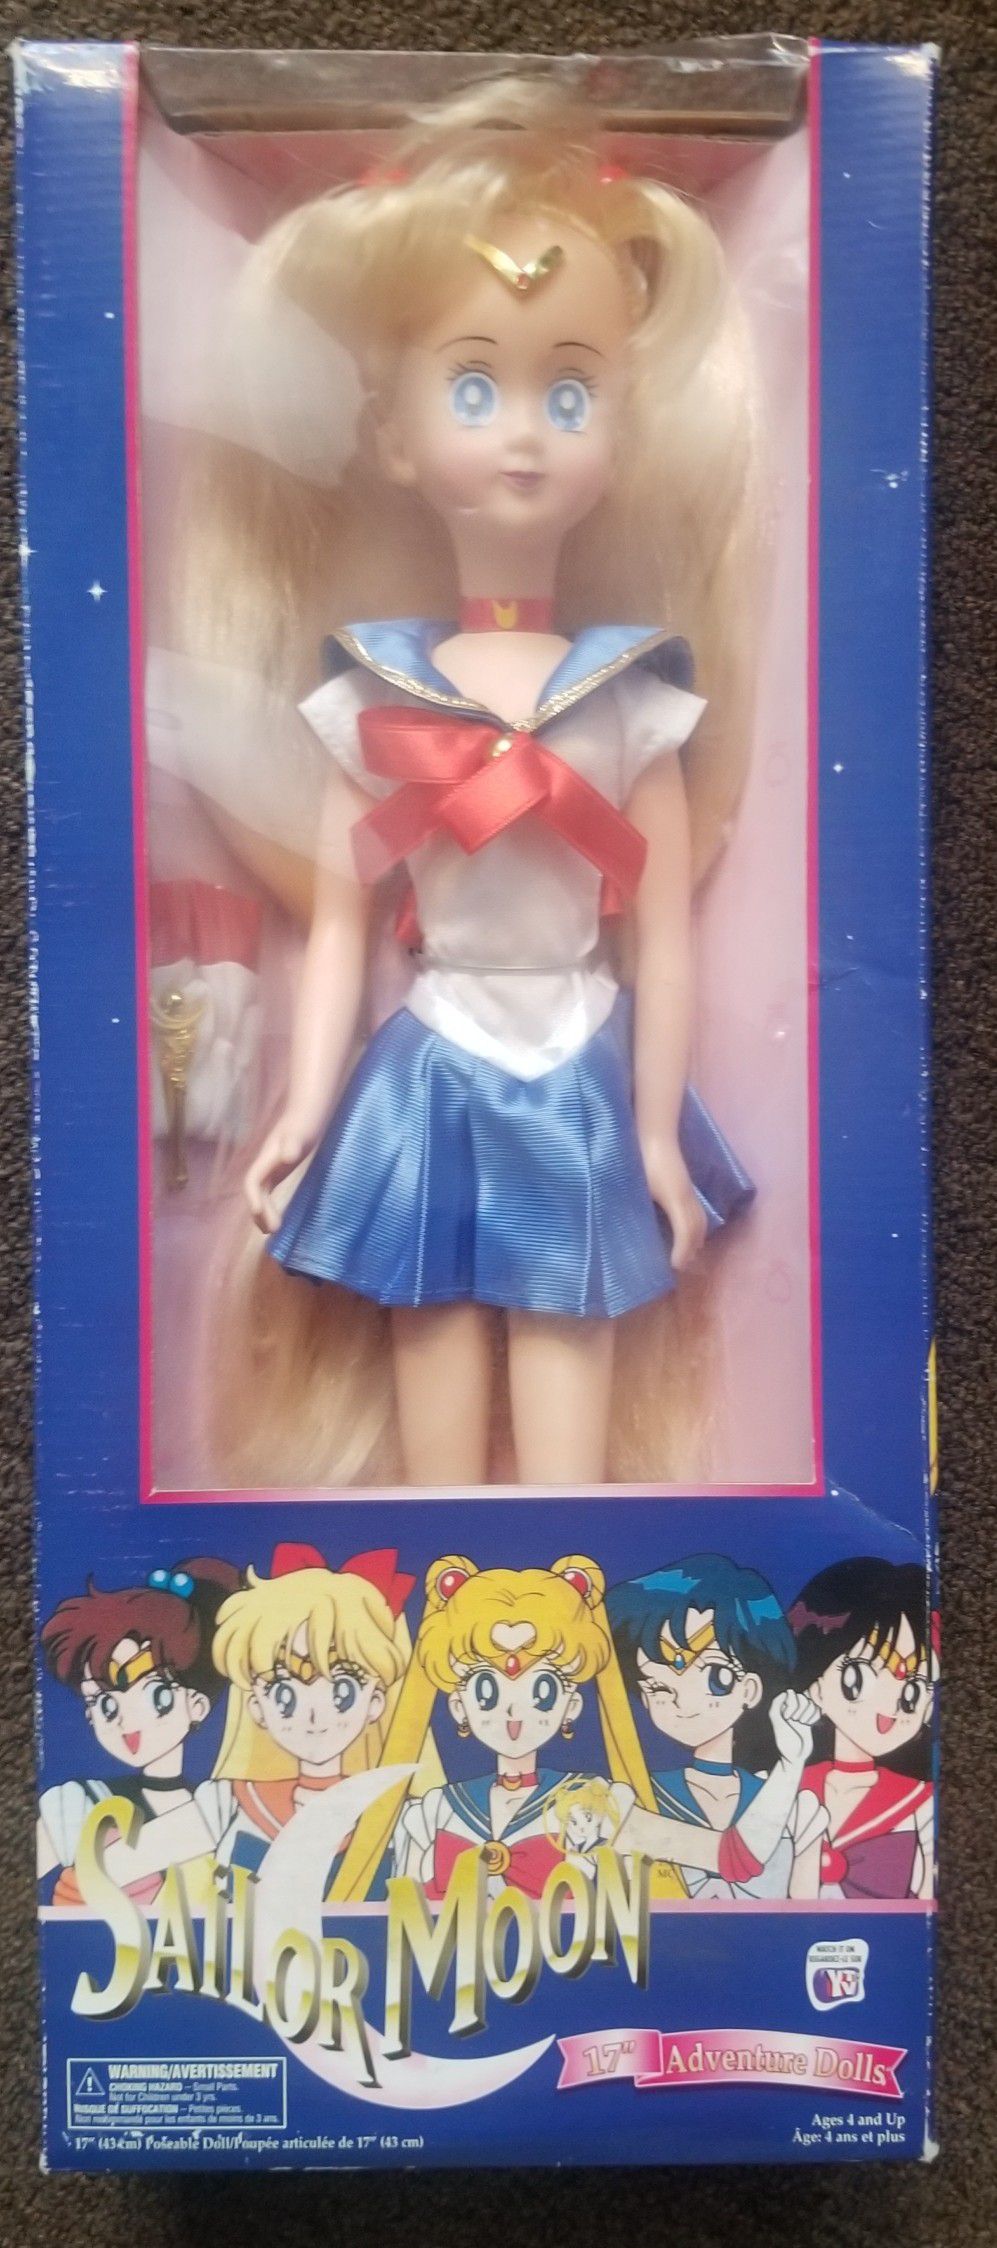 Vintage Sailor Moon Doll Unopened Box